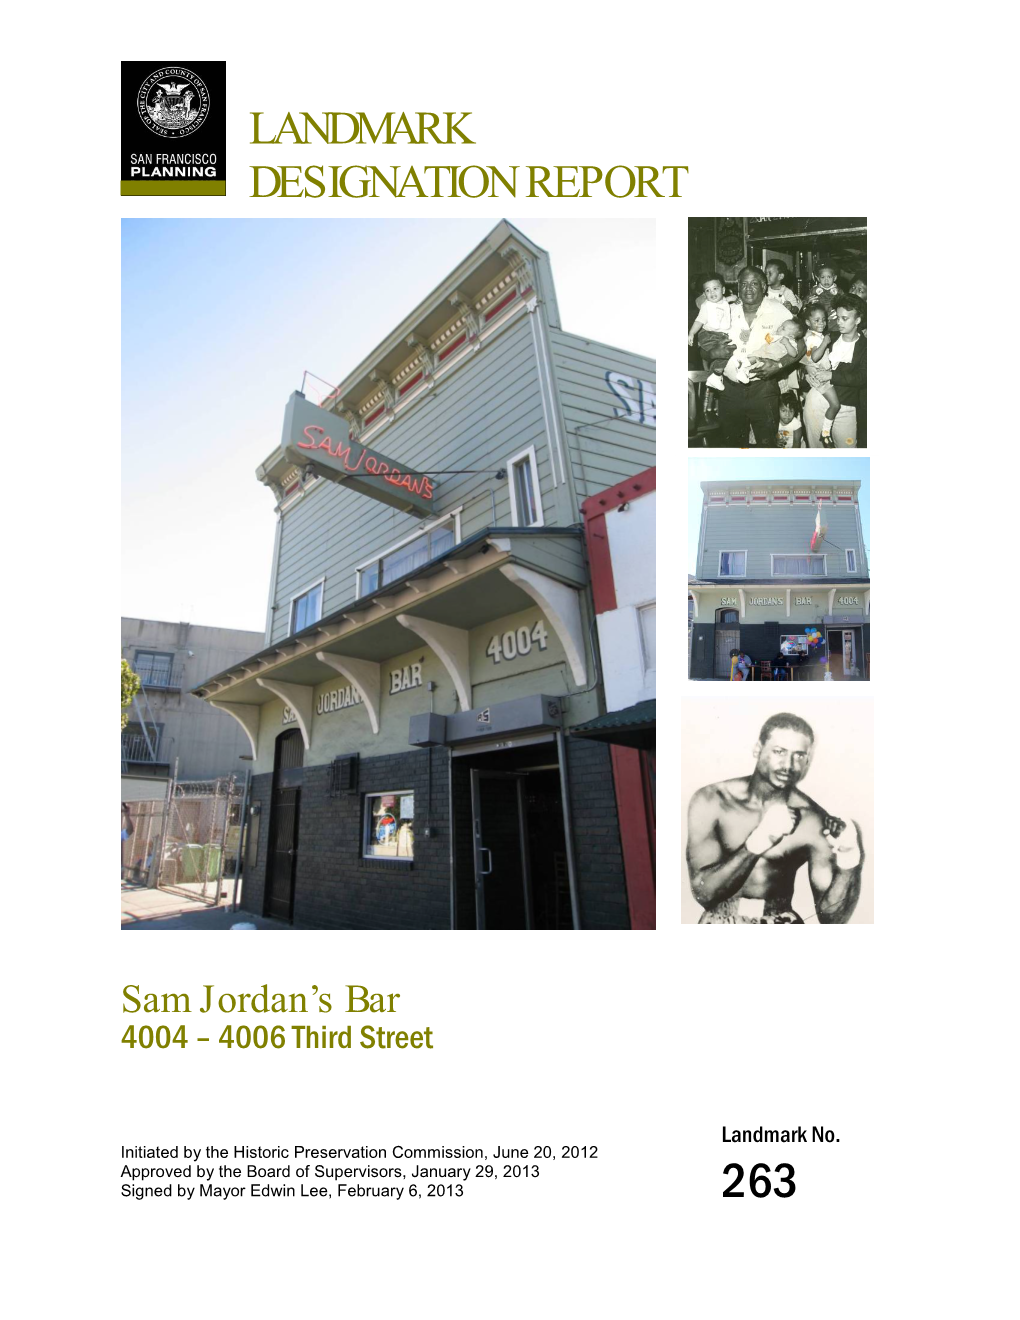 Sam Jordan's Bar, Primary Facade